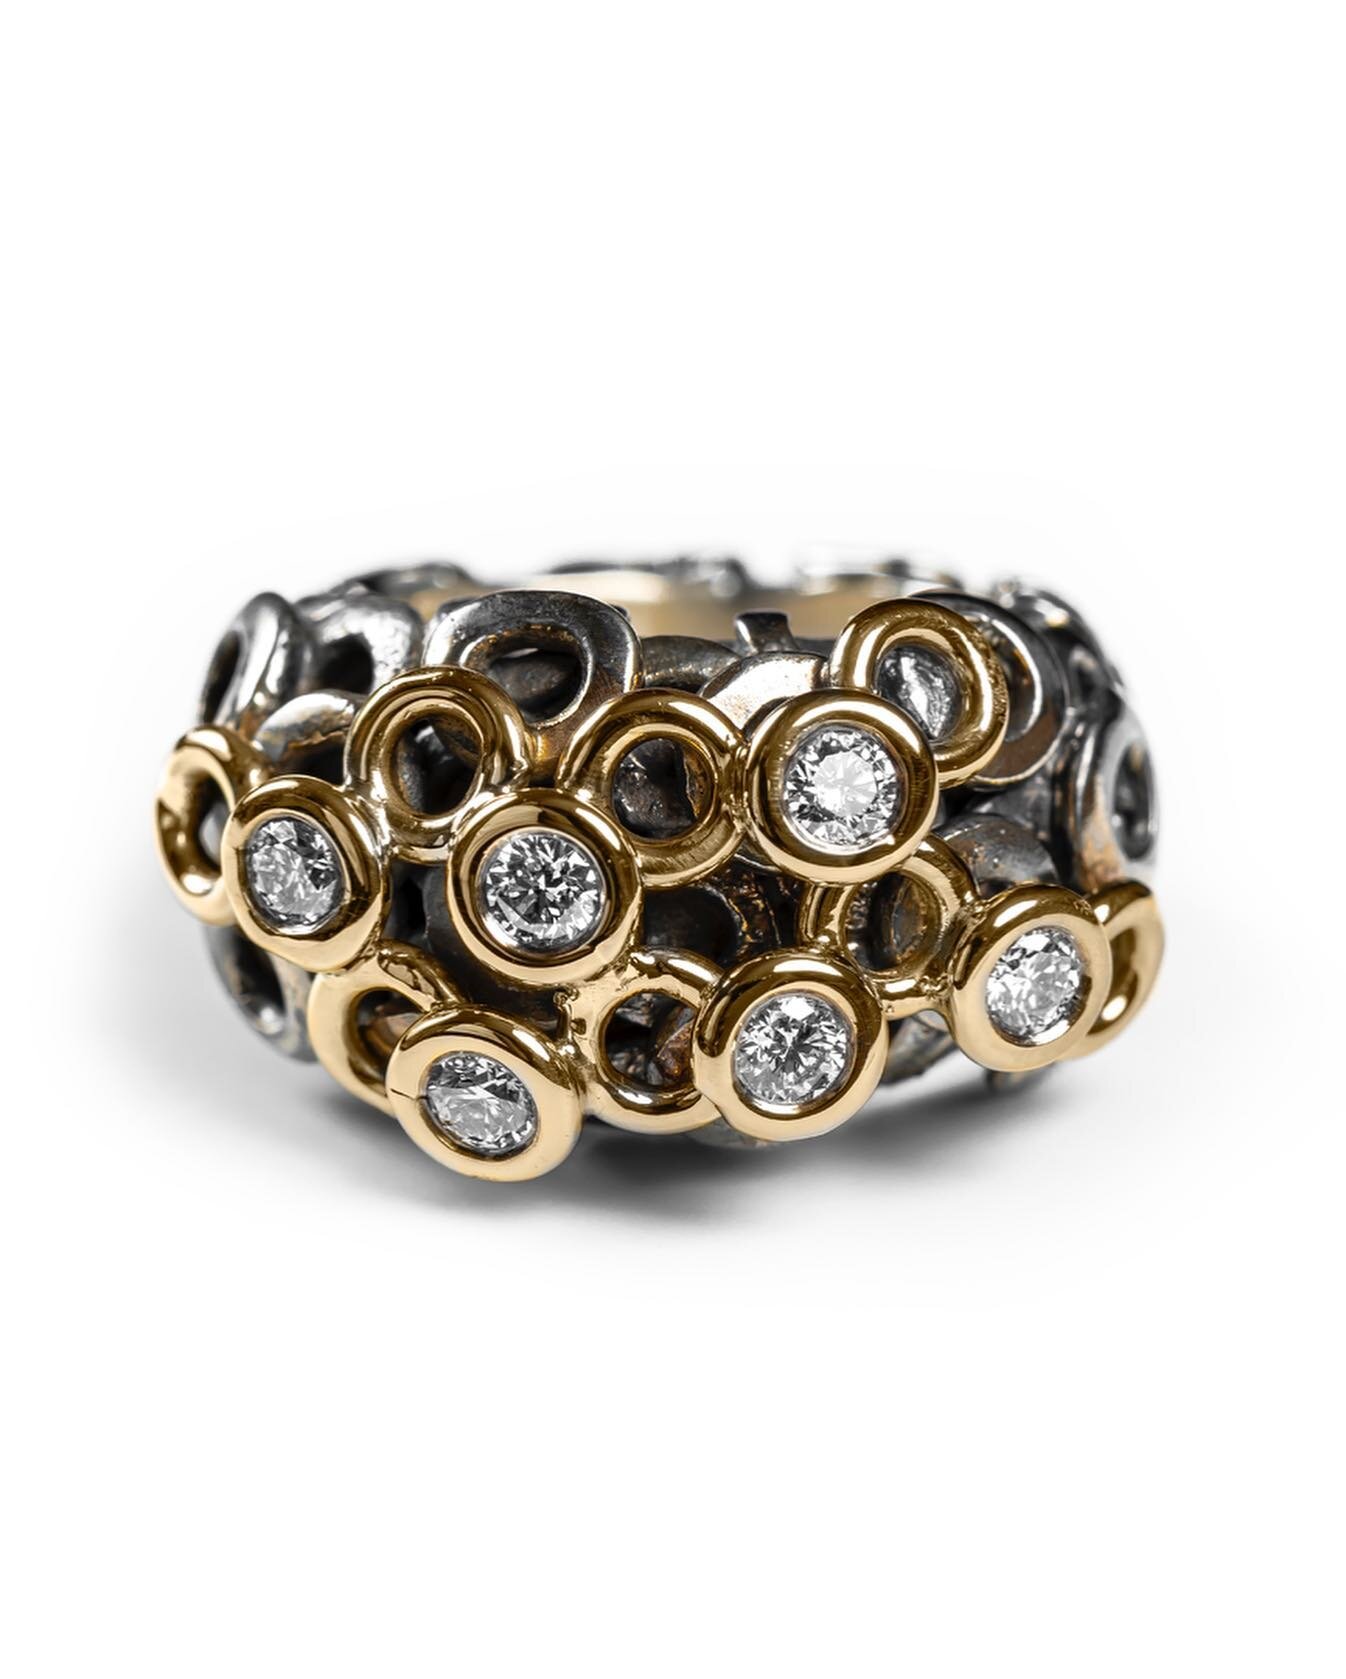 Black Squid ring 
Photo @pete.helme 
#oxidisedsilver 
#18ctgold 
#diamonds
#oxidisedjewellery 
#oxidisedsilverjewellery 
#yellowgold 
#ringsofinstagram 
#ringoftheday 
#bathindependent 
#handmadejewelry 
#shoplocal